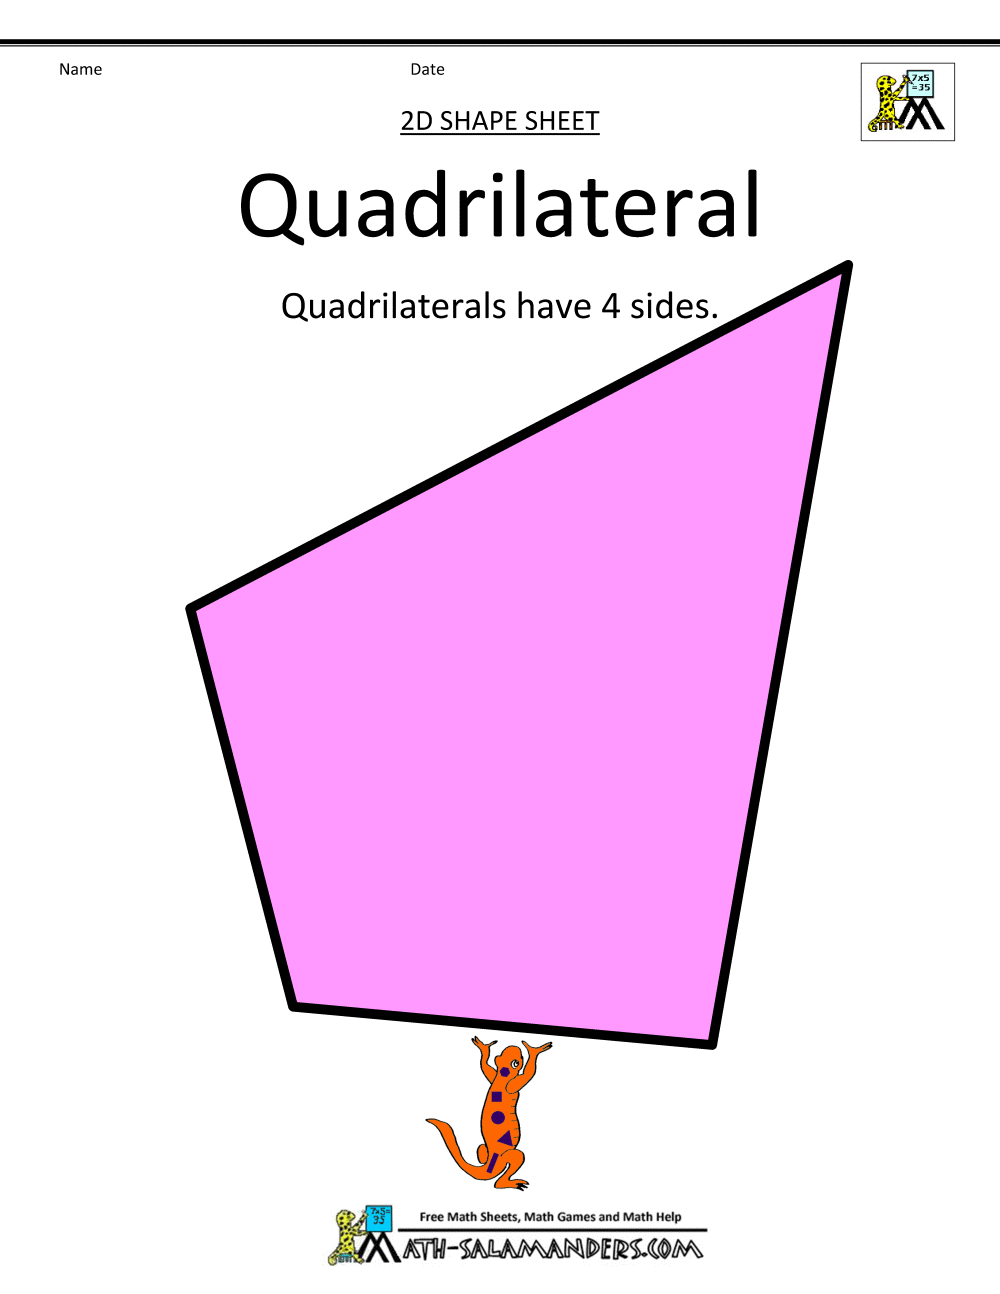 quadrilaterals clipart - photo #19